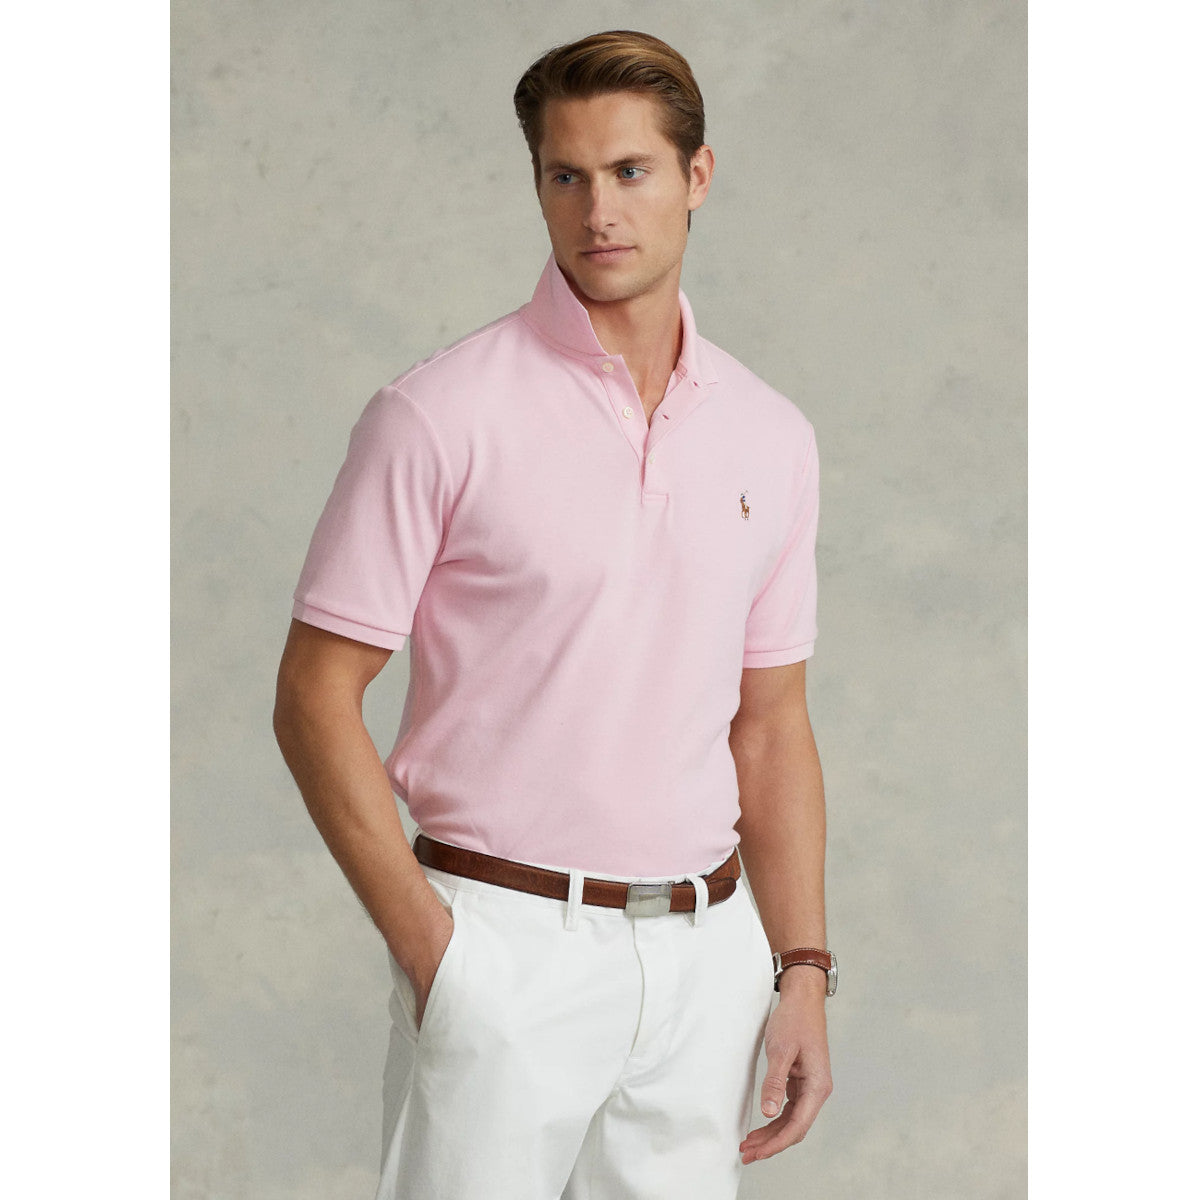 Polo Ralph Lauren Interlock Polo Shirt 011 Carmel Pink